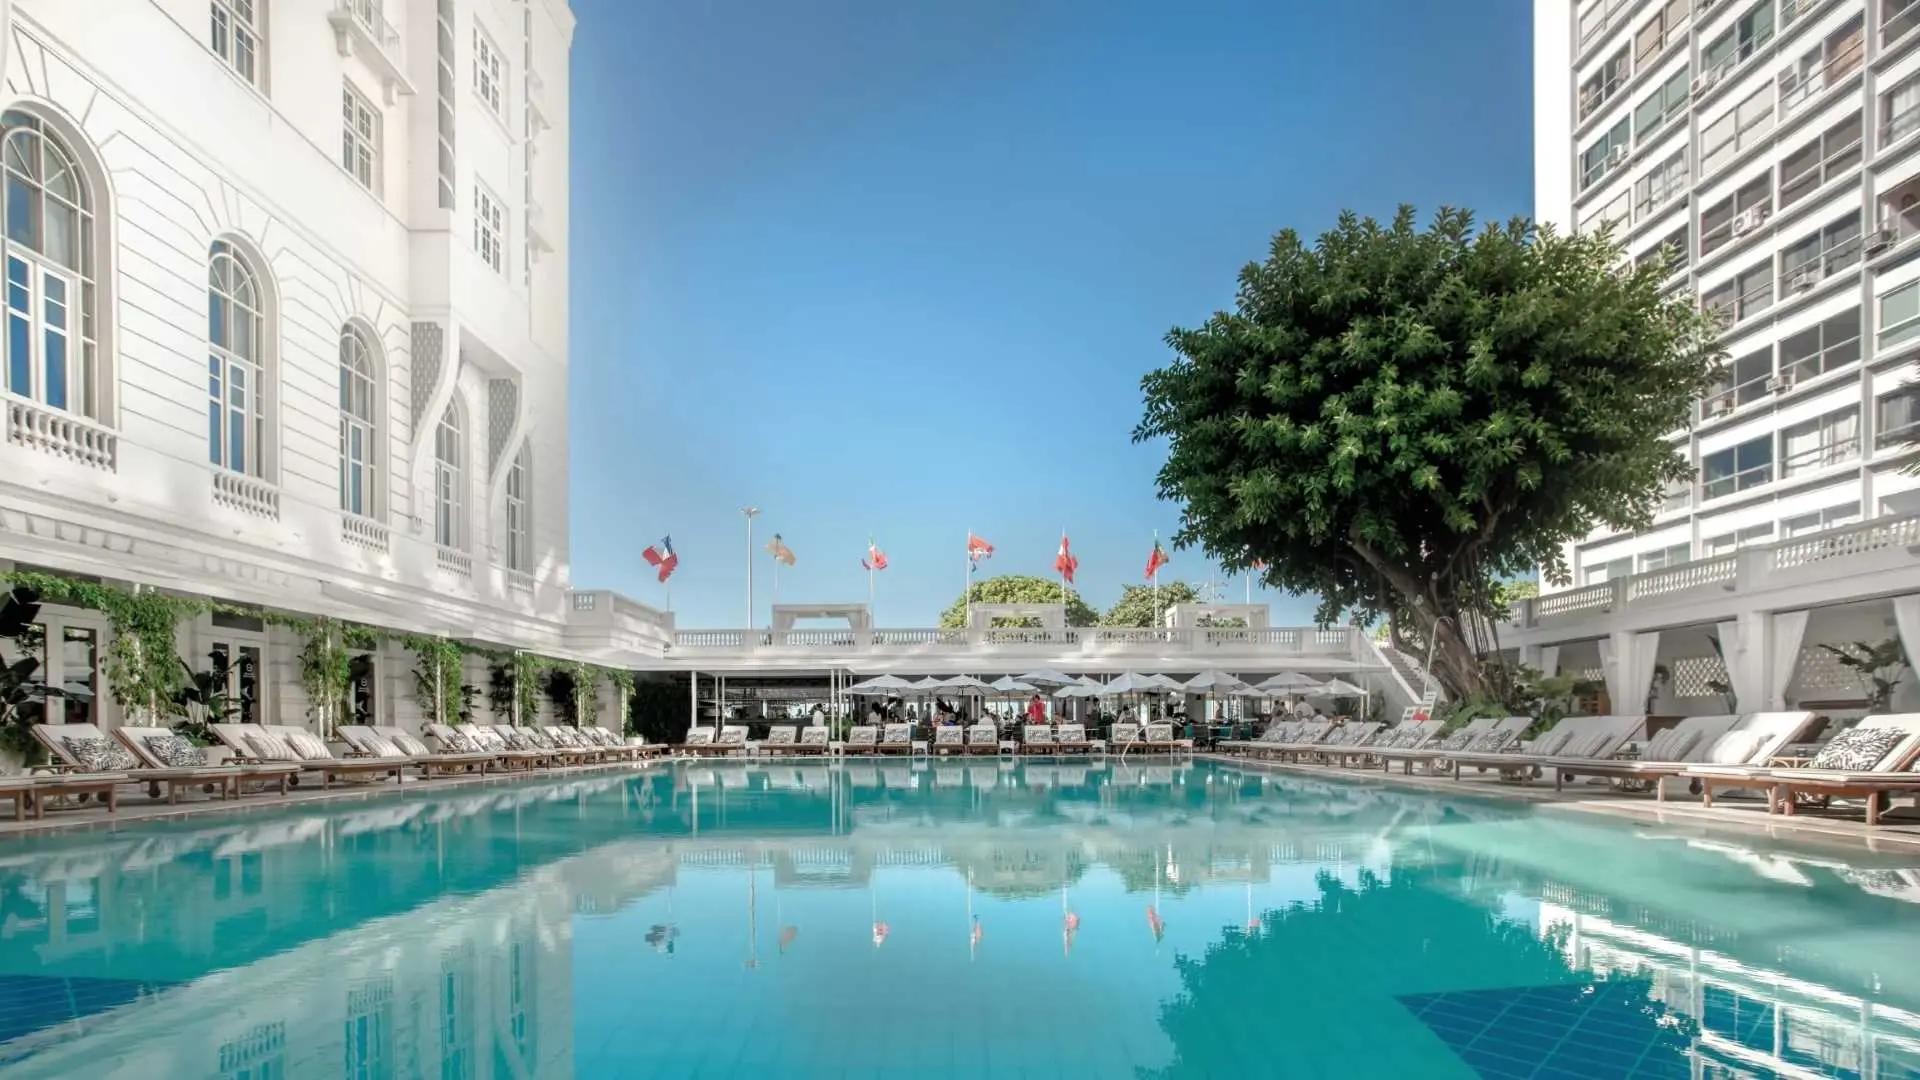 Hotel review Service & Facilities' - Copacabana Palace - a Belmond Hotel - 0